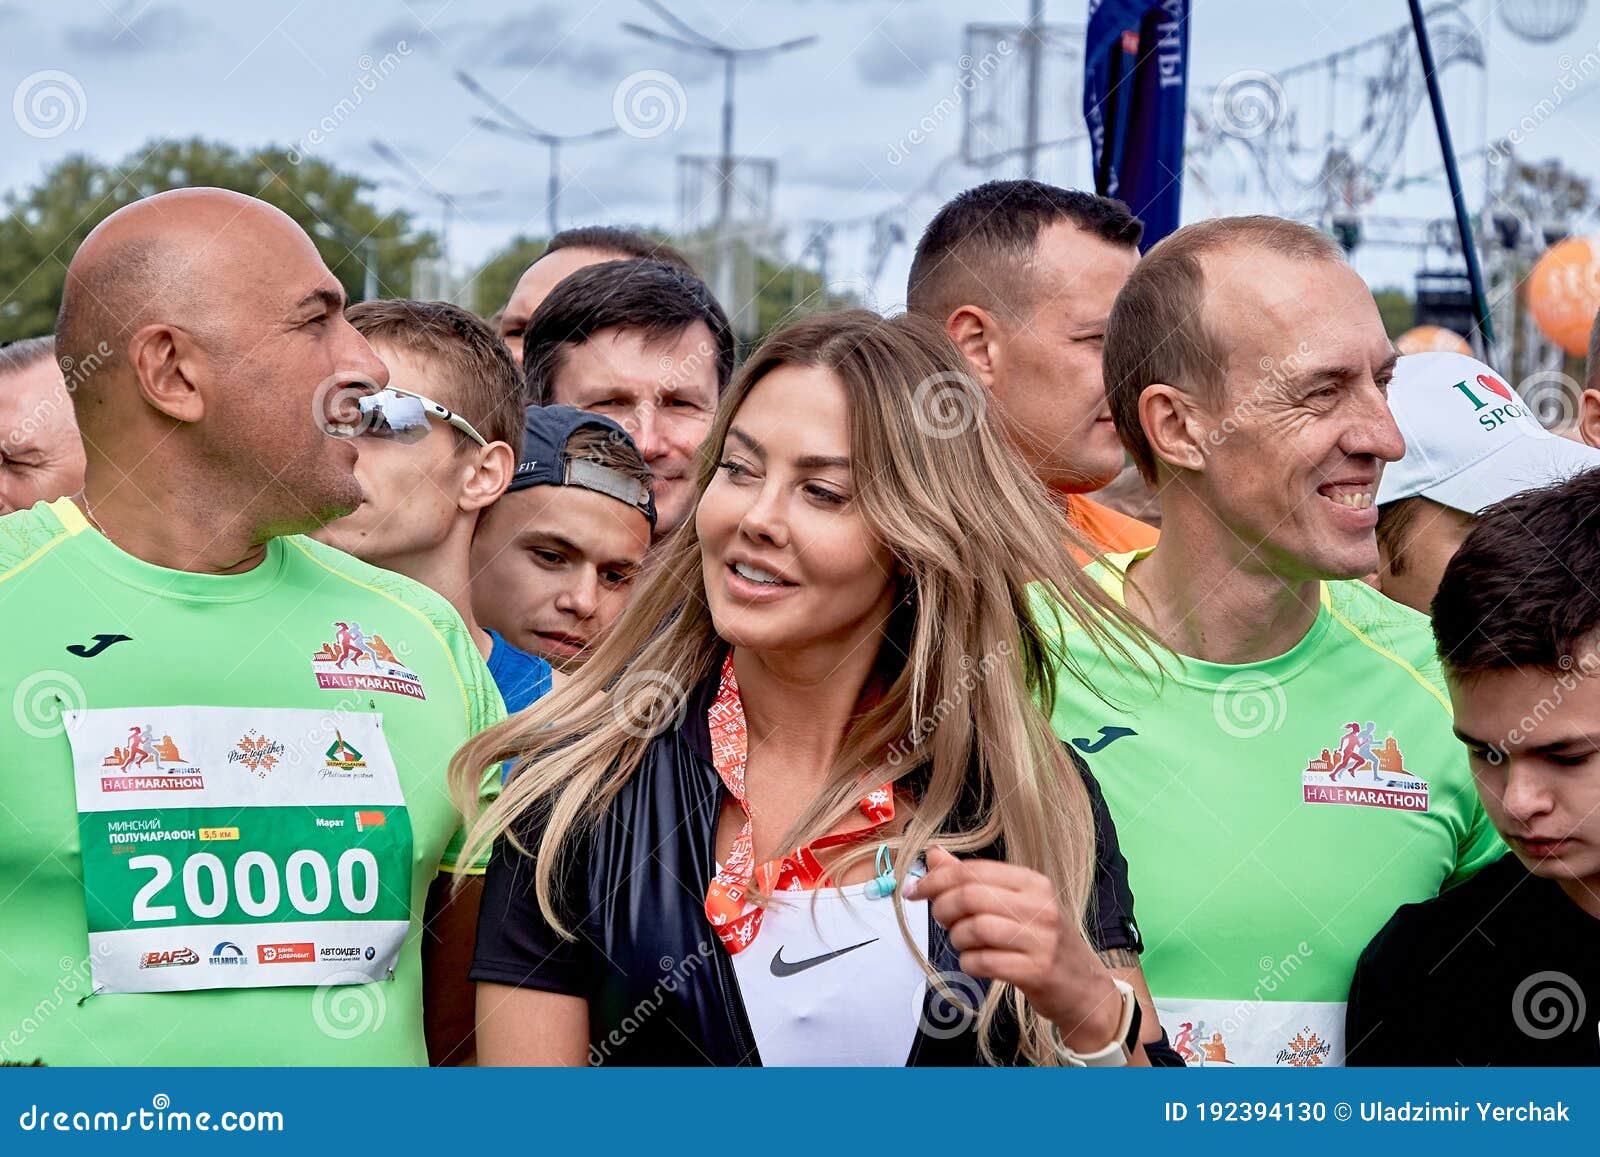 https://thumbs.dreamstime.com/z/september-minsk-belarus-beautiful-woman-standing-happy-athletes-half-marathon-minsk-running-city-192394130.jpg